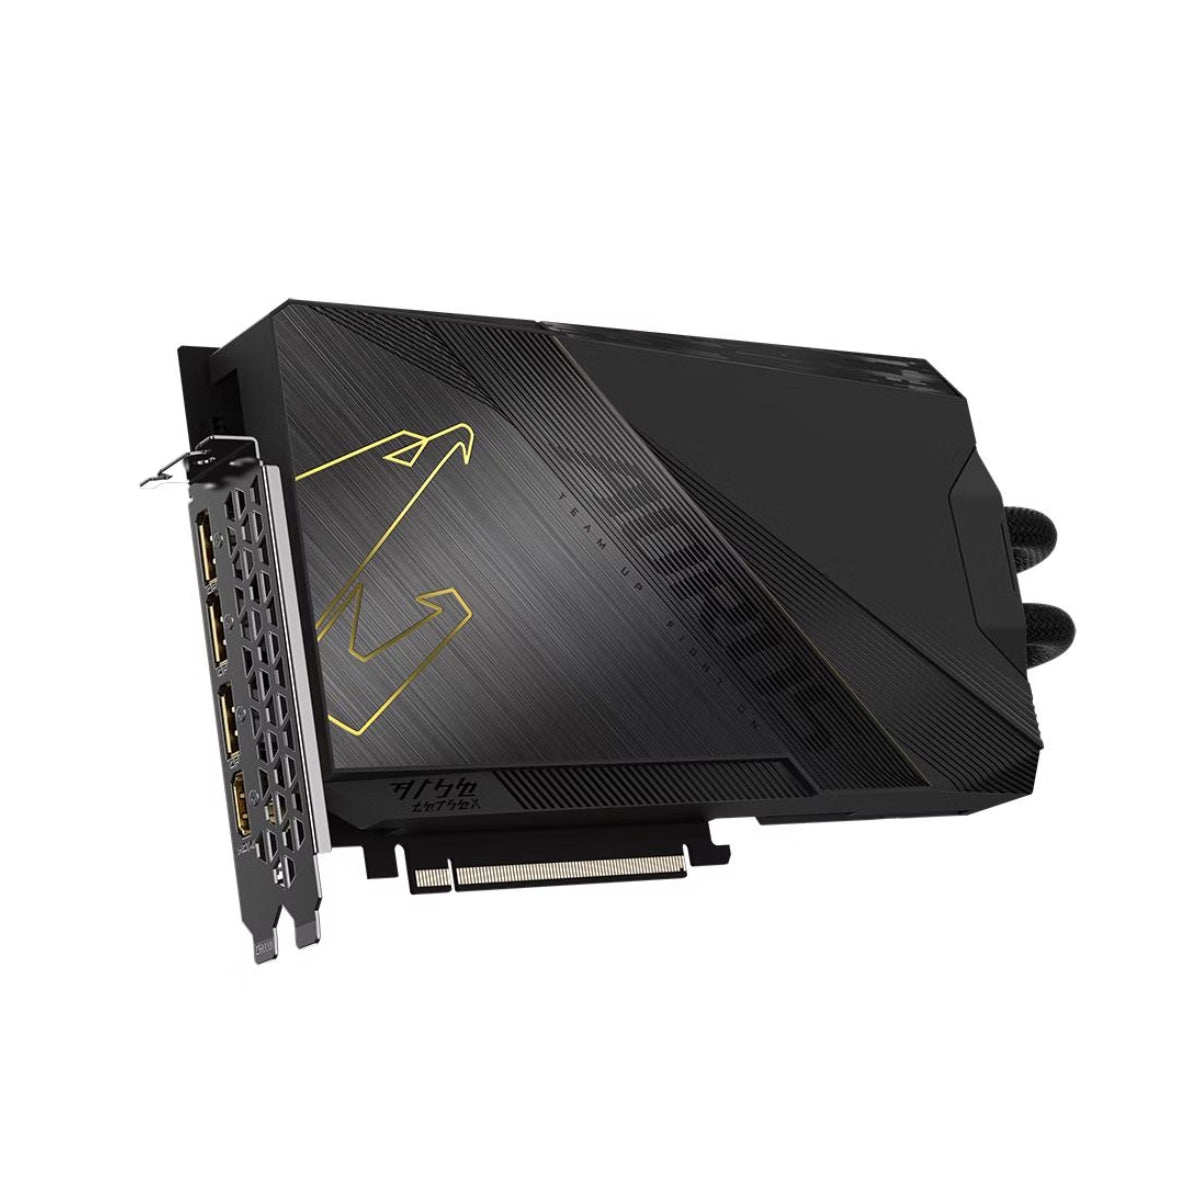 Gigabyte Aorus Extreme GeForce RTX 4090 24GB GDDR6X Graphics Card - كرت الشاشة - Store 974 | ستور ٩٧٤